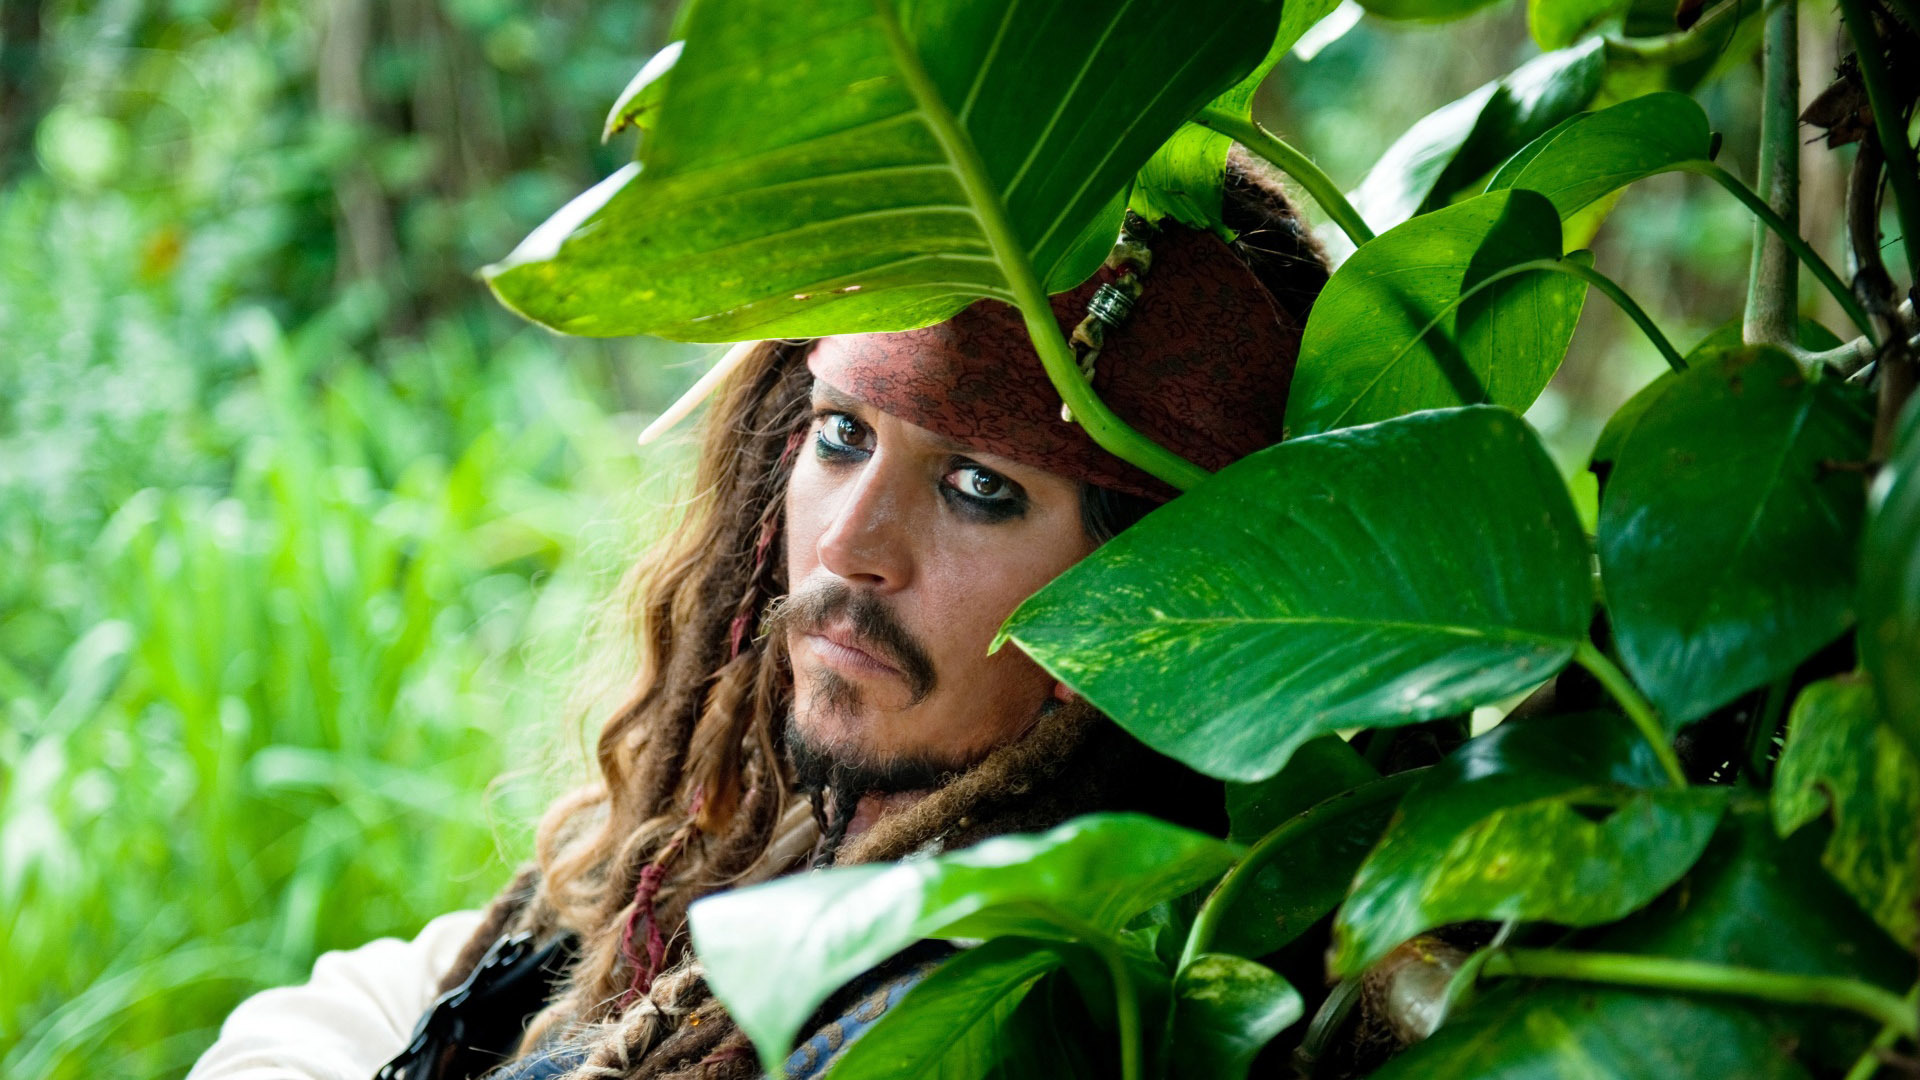 Johnny Depp In Pirate Look - Johnny Depp Hd Wallpaper Pirates Of The Caribbean - HD Wallpaper 